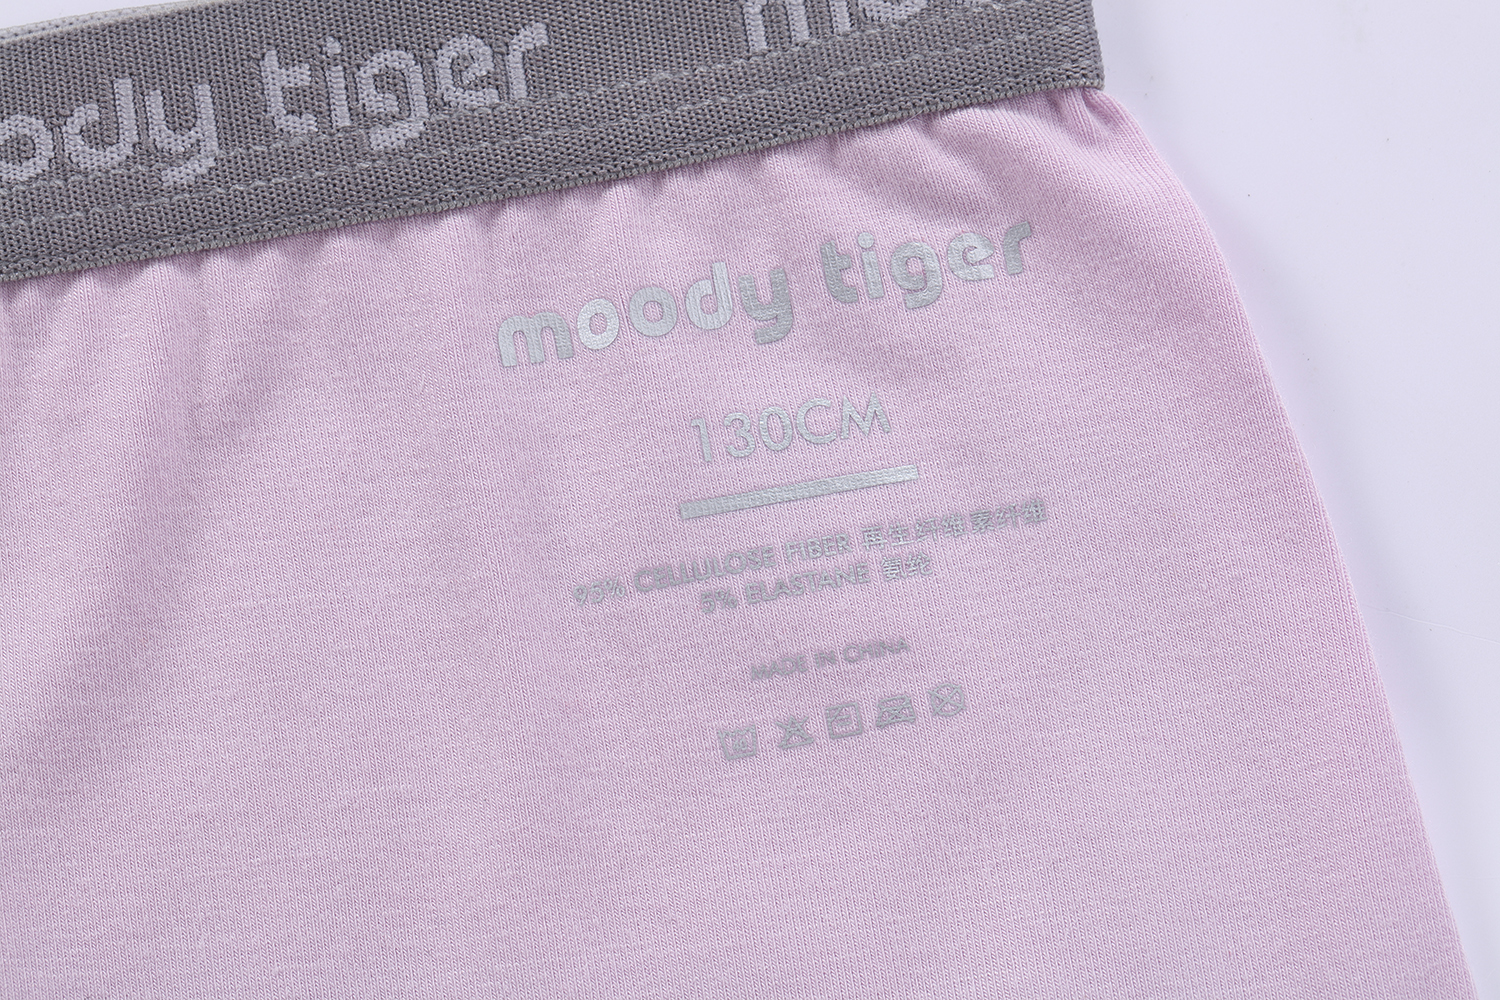 200818moody tiger-嵹瑕扜荌噙昜31.JPG